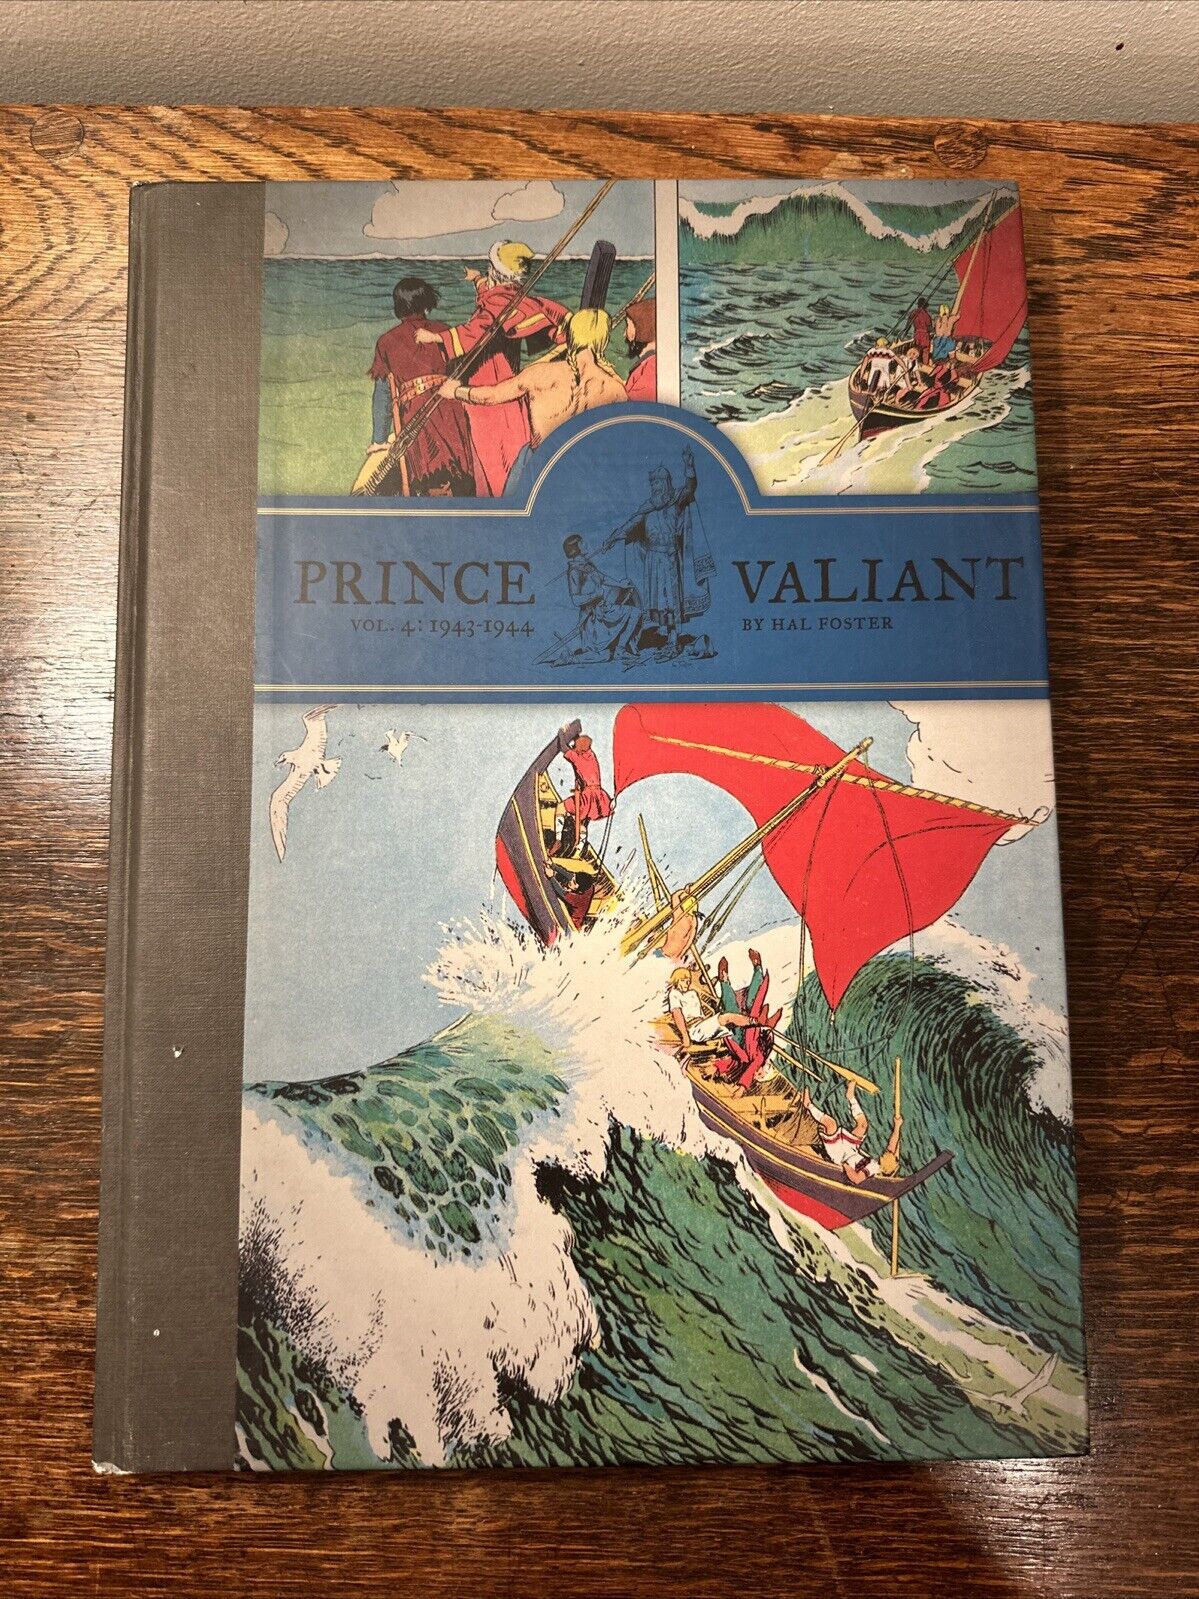 Prince Valiant Vol. 4 1943-1944 (2011) Hal Foster Fantagraphics Hardcover VGC